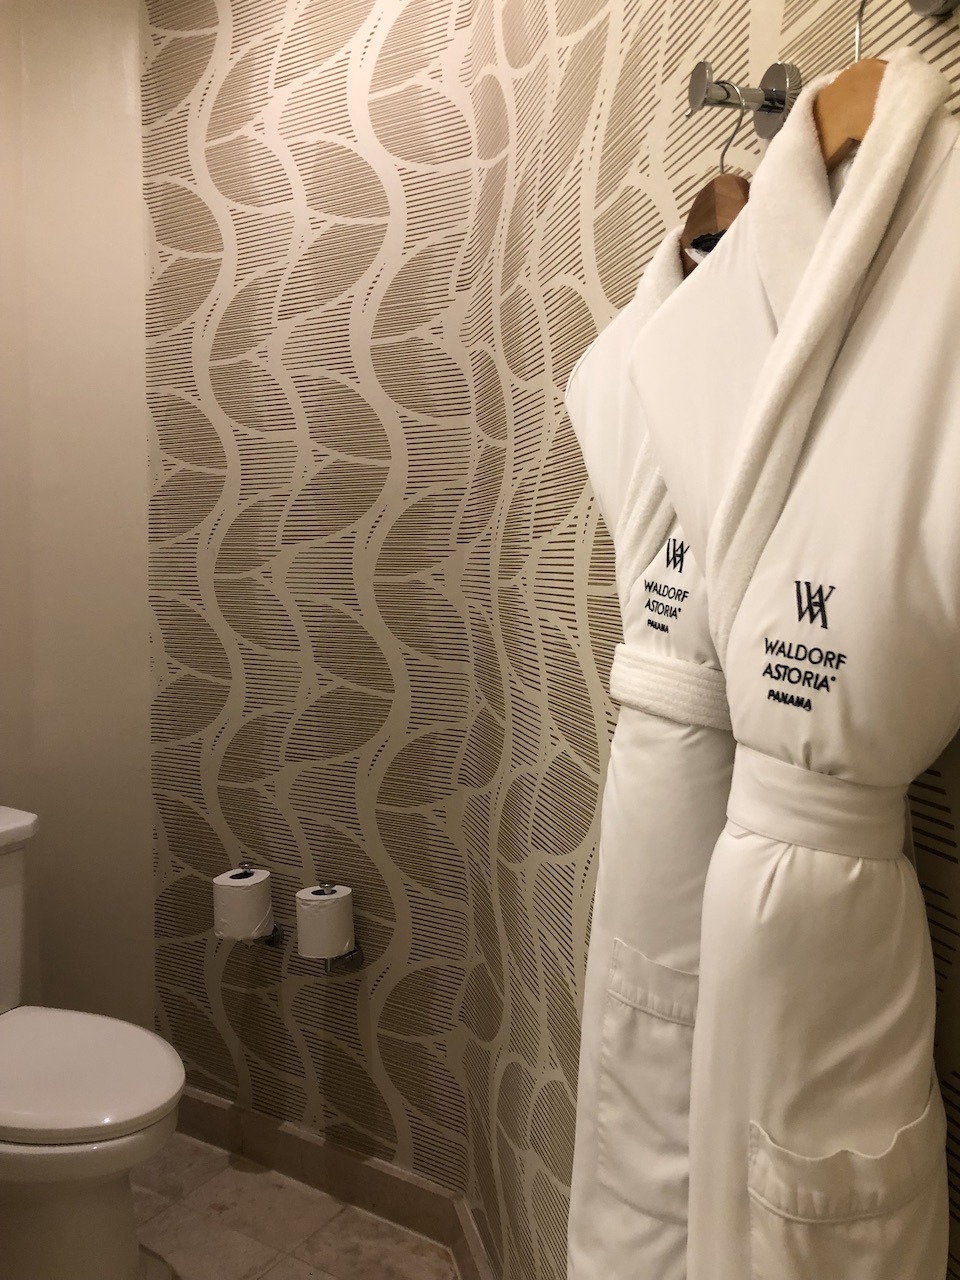 Waldorf-Astoria Panama robes